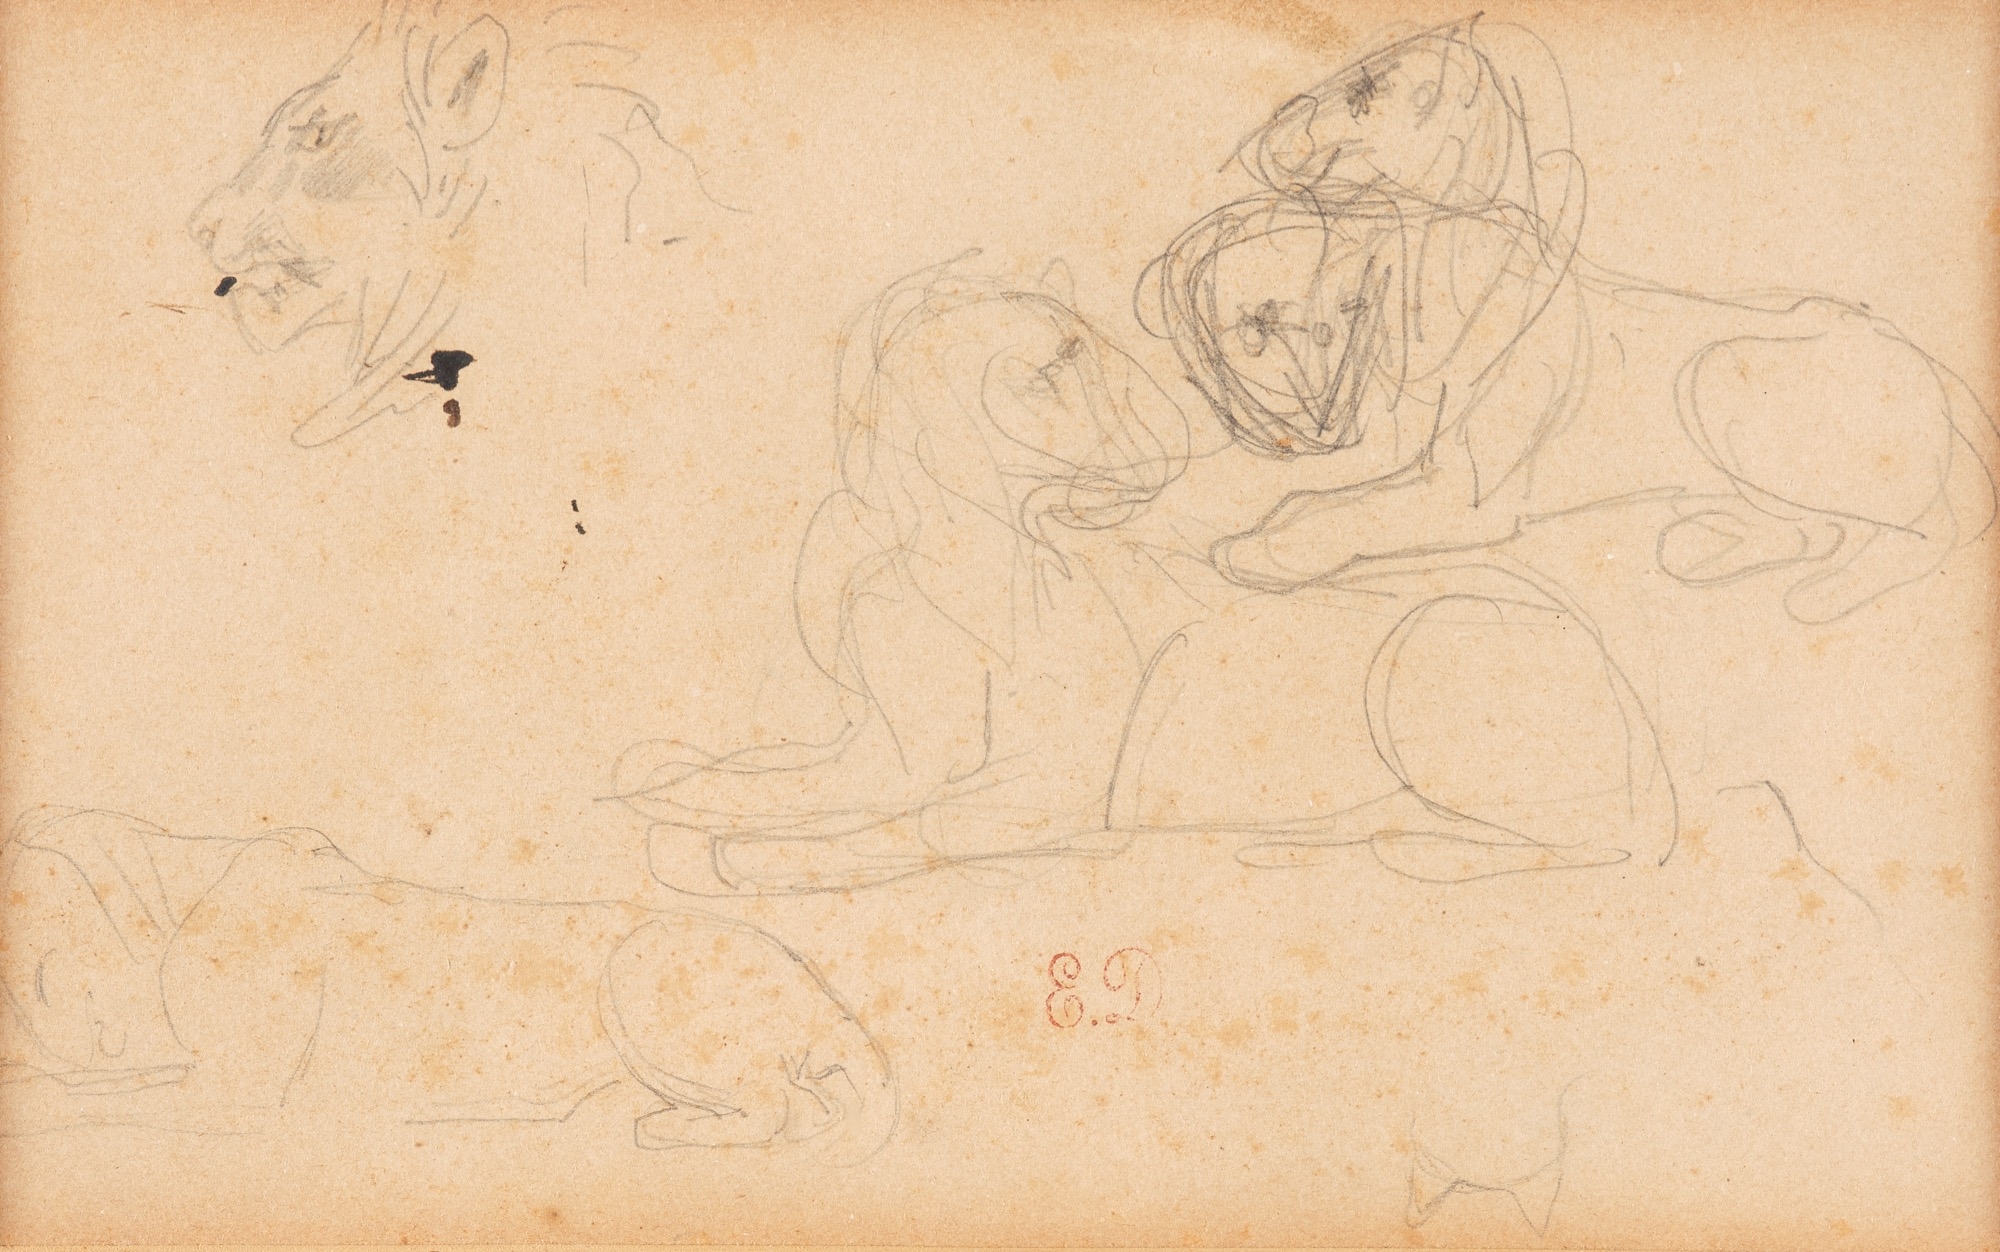 Löwen by Eugène Delacroix